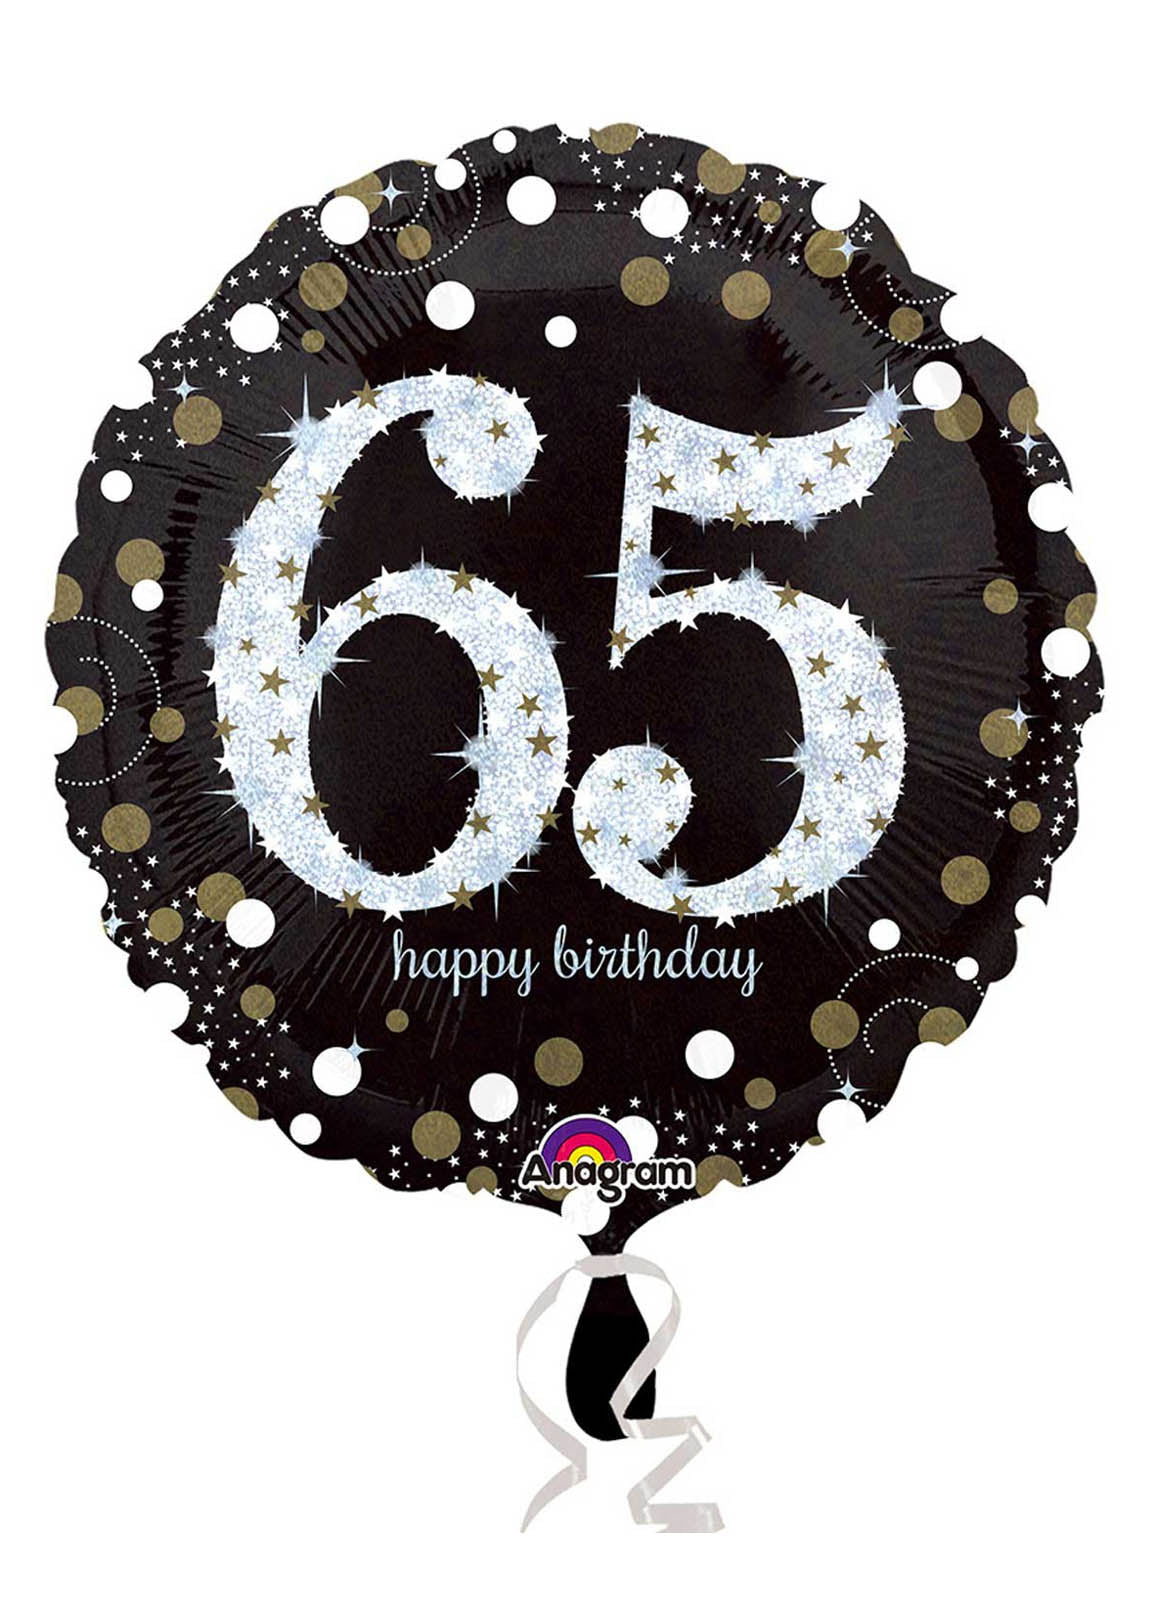 65th Birthday Party